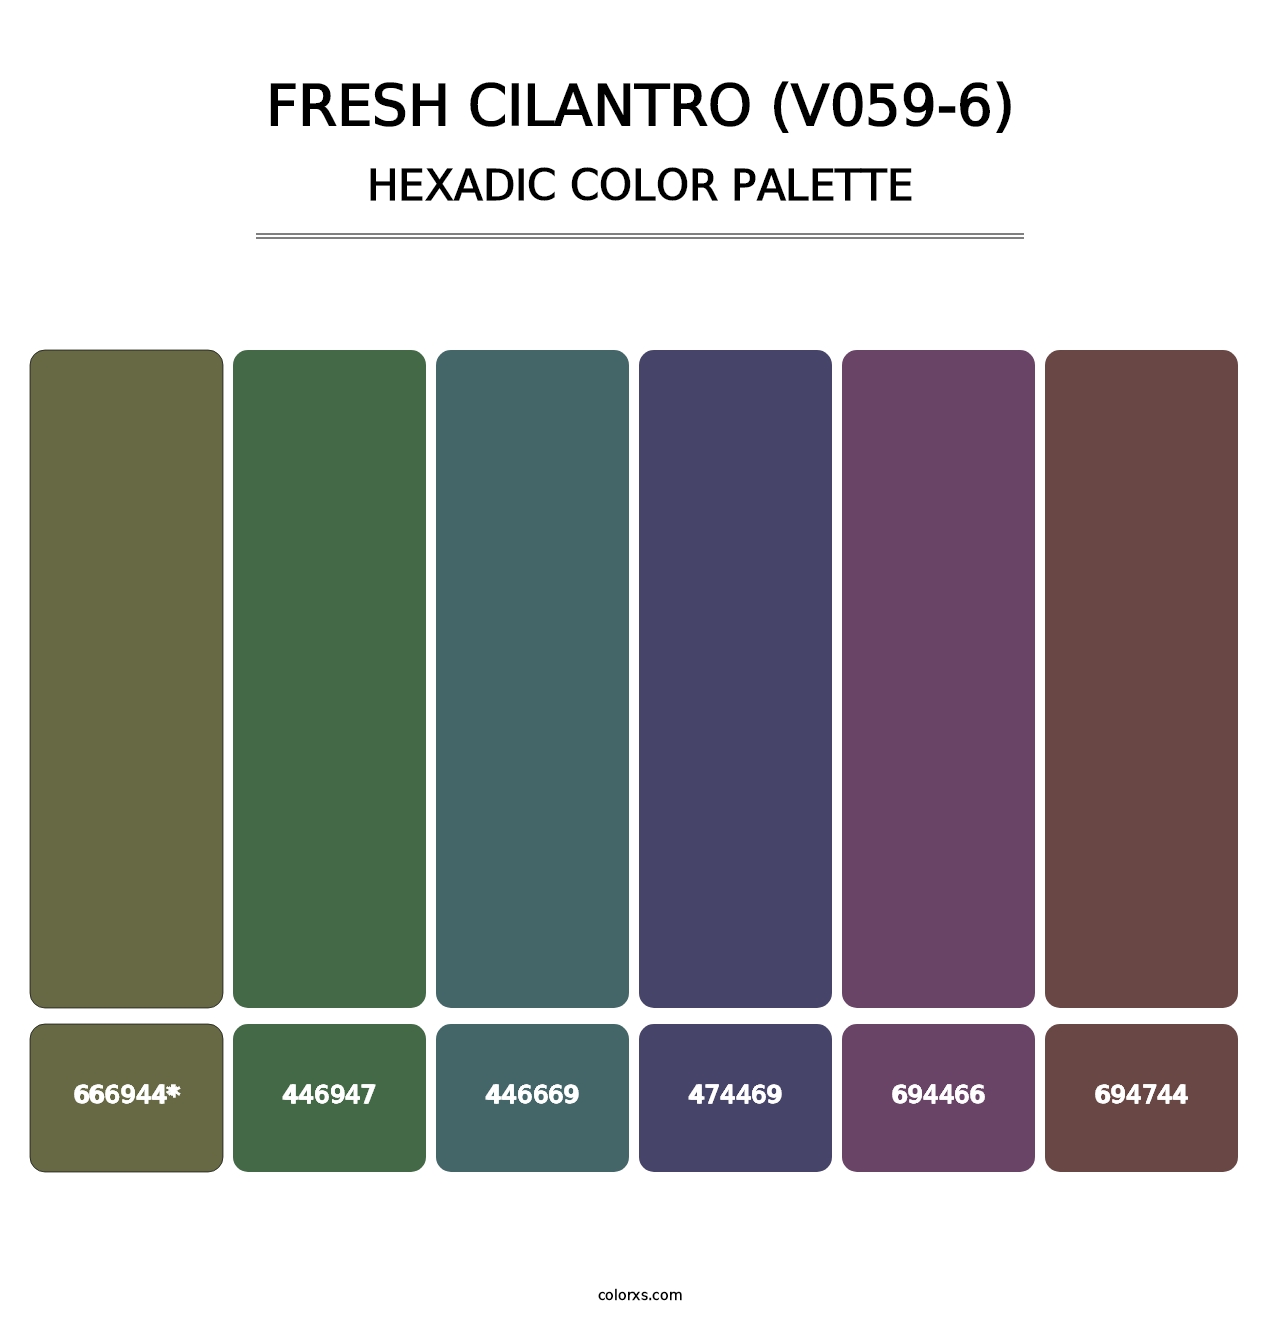 Fresh Cilantro (V059-6) - Hexadic Color Palette